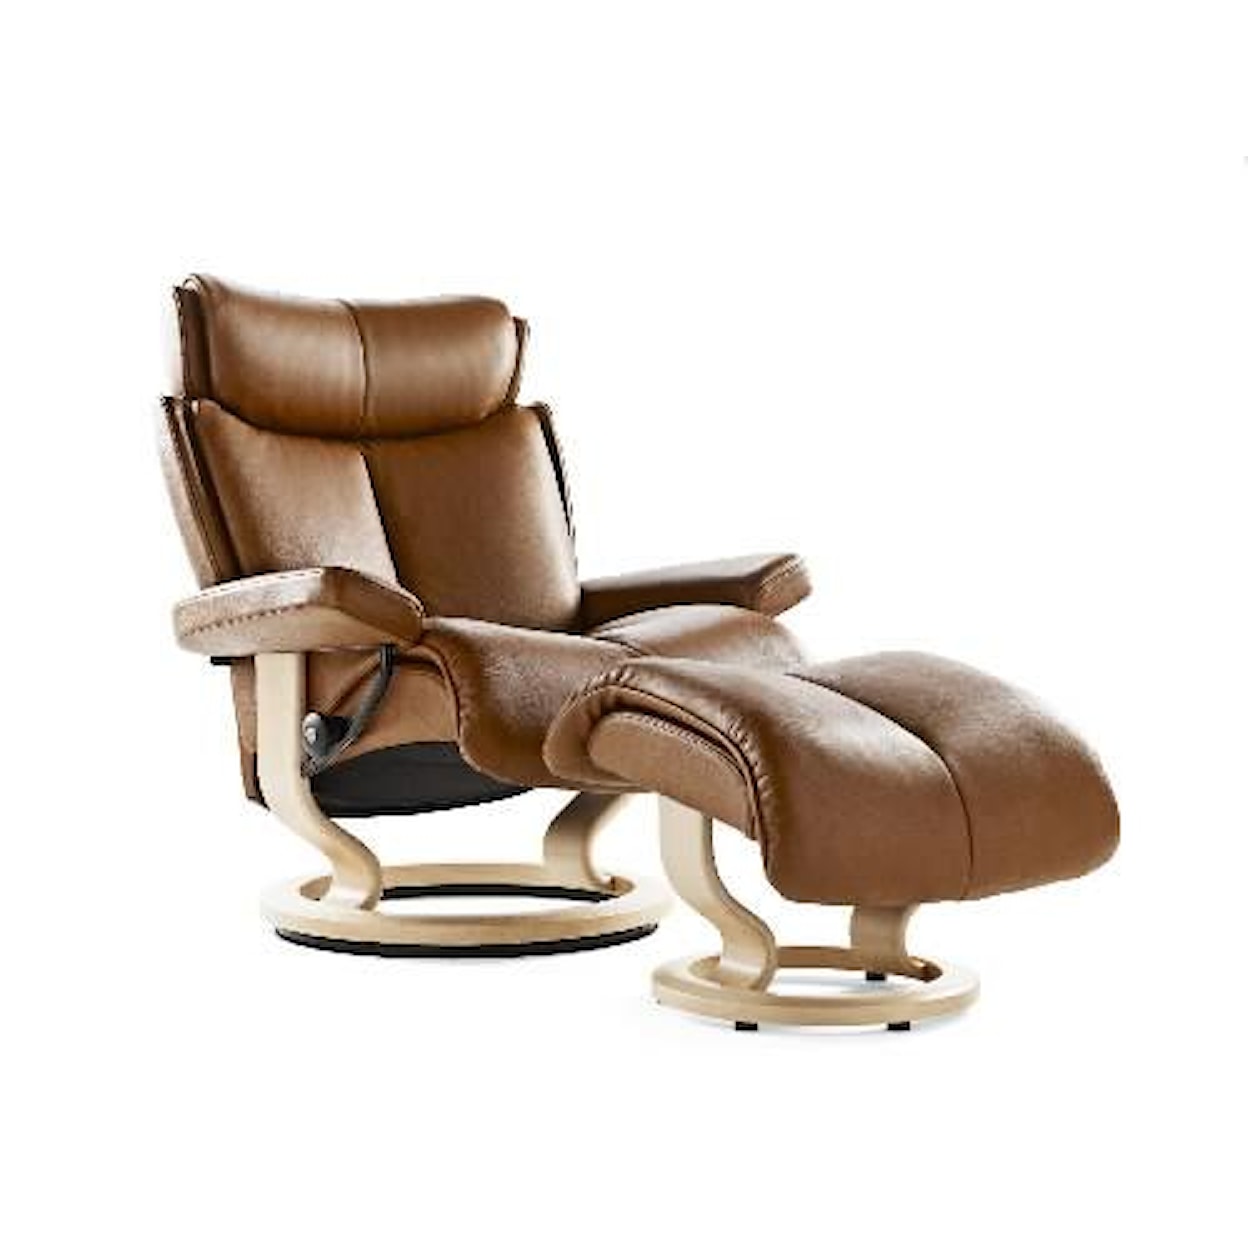 Stressless by Ekornes Magic Medium Chair & Ottoman with Classic Base